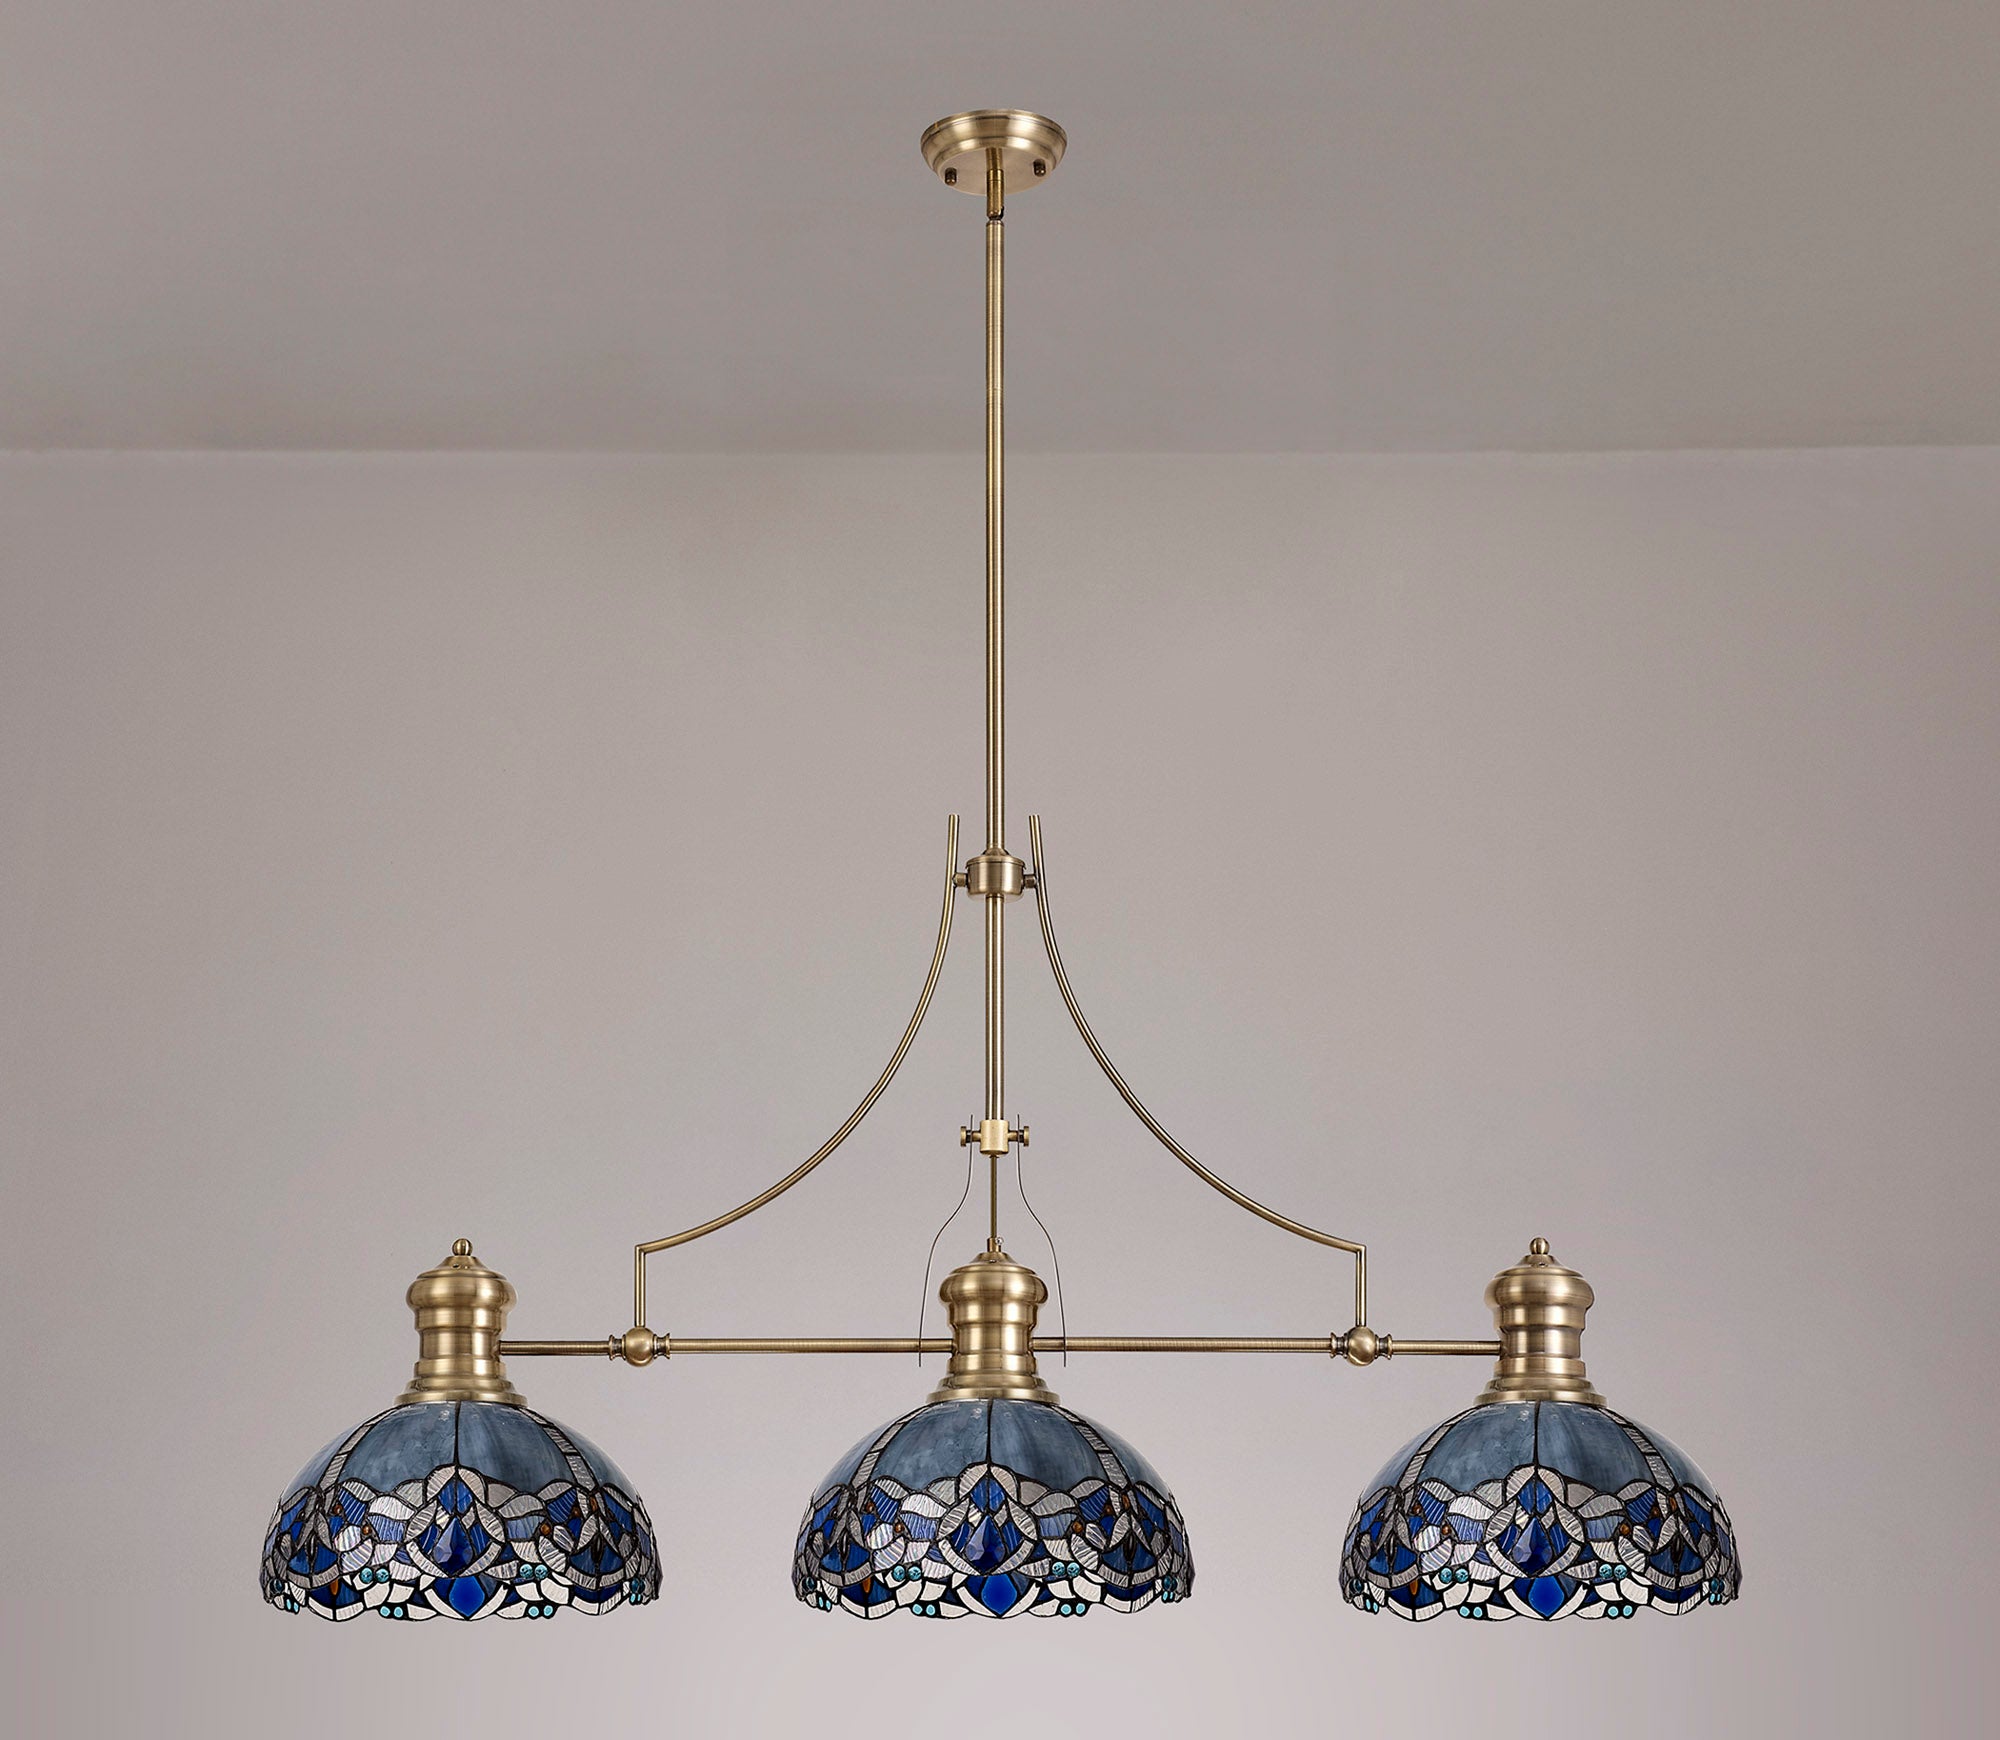 Docker, Oseki 3 Light Linear Pendant E27 With 30cm Tiffany Shade, Antique Brass, Blue, Clear Crystal